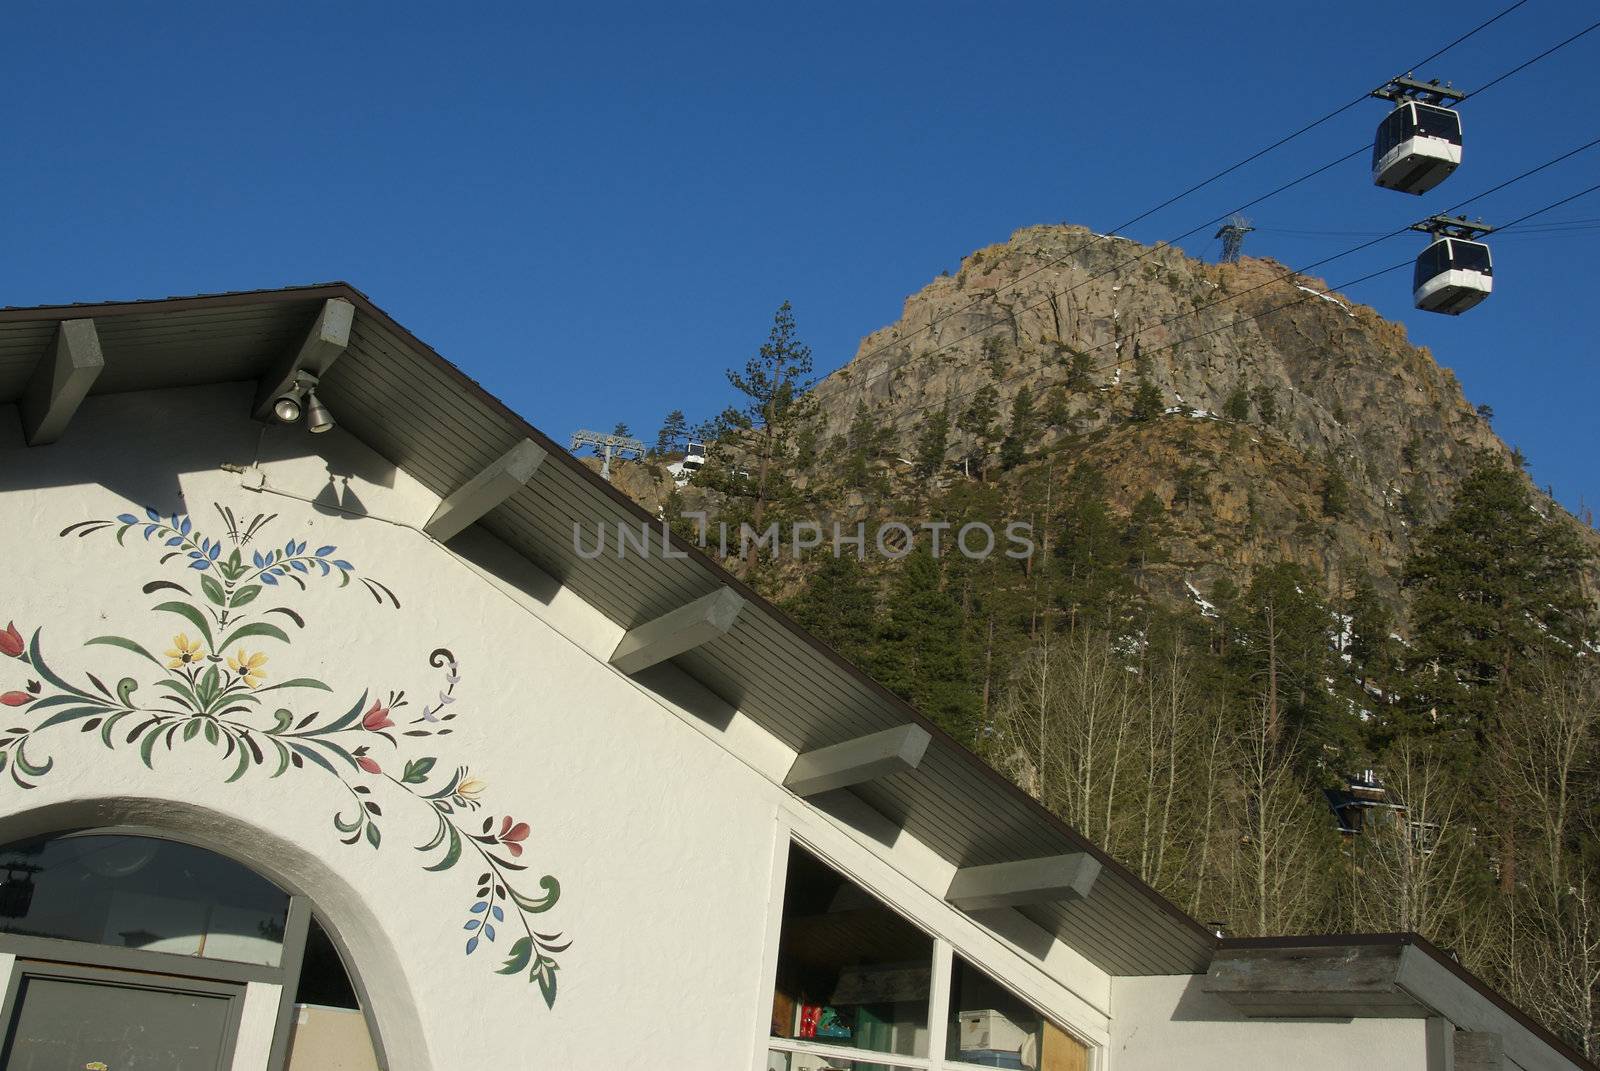 A Scenic ski lodge sits against a tall mountain peak and gondola